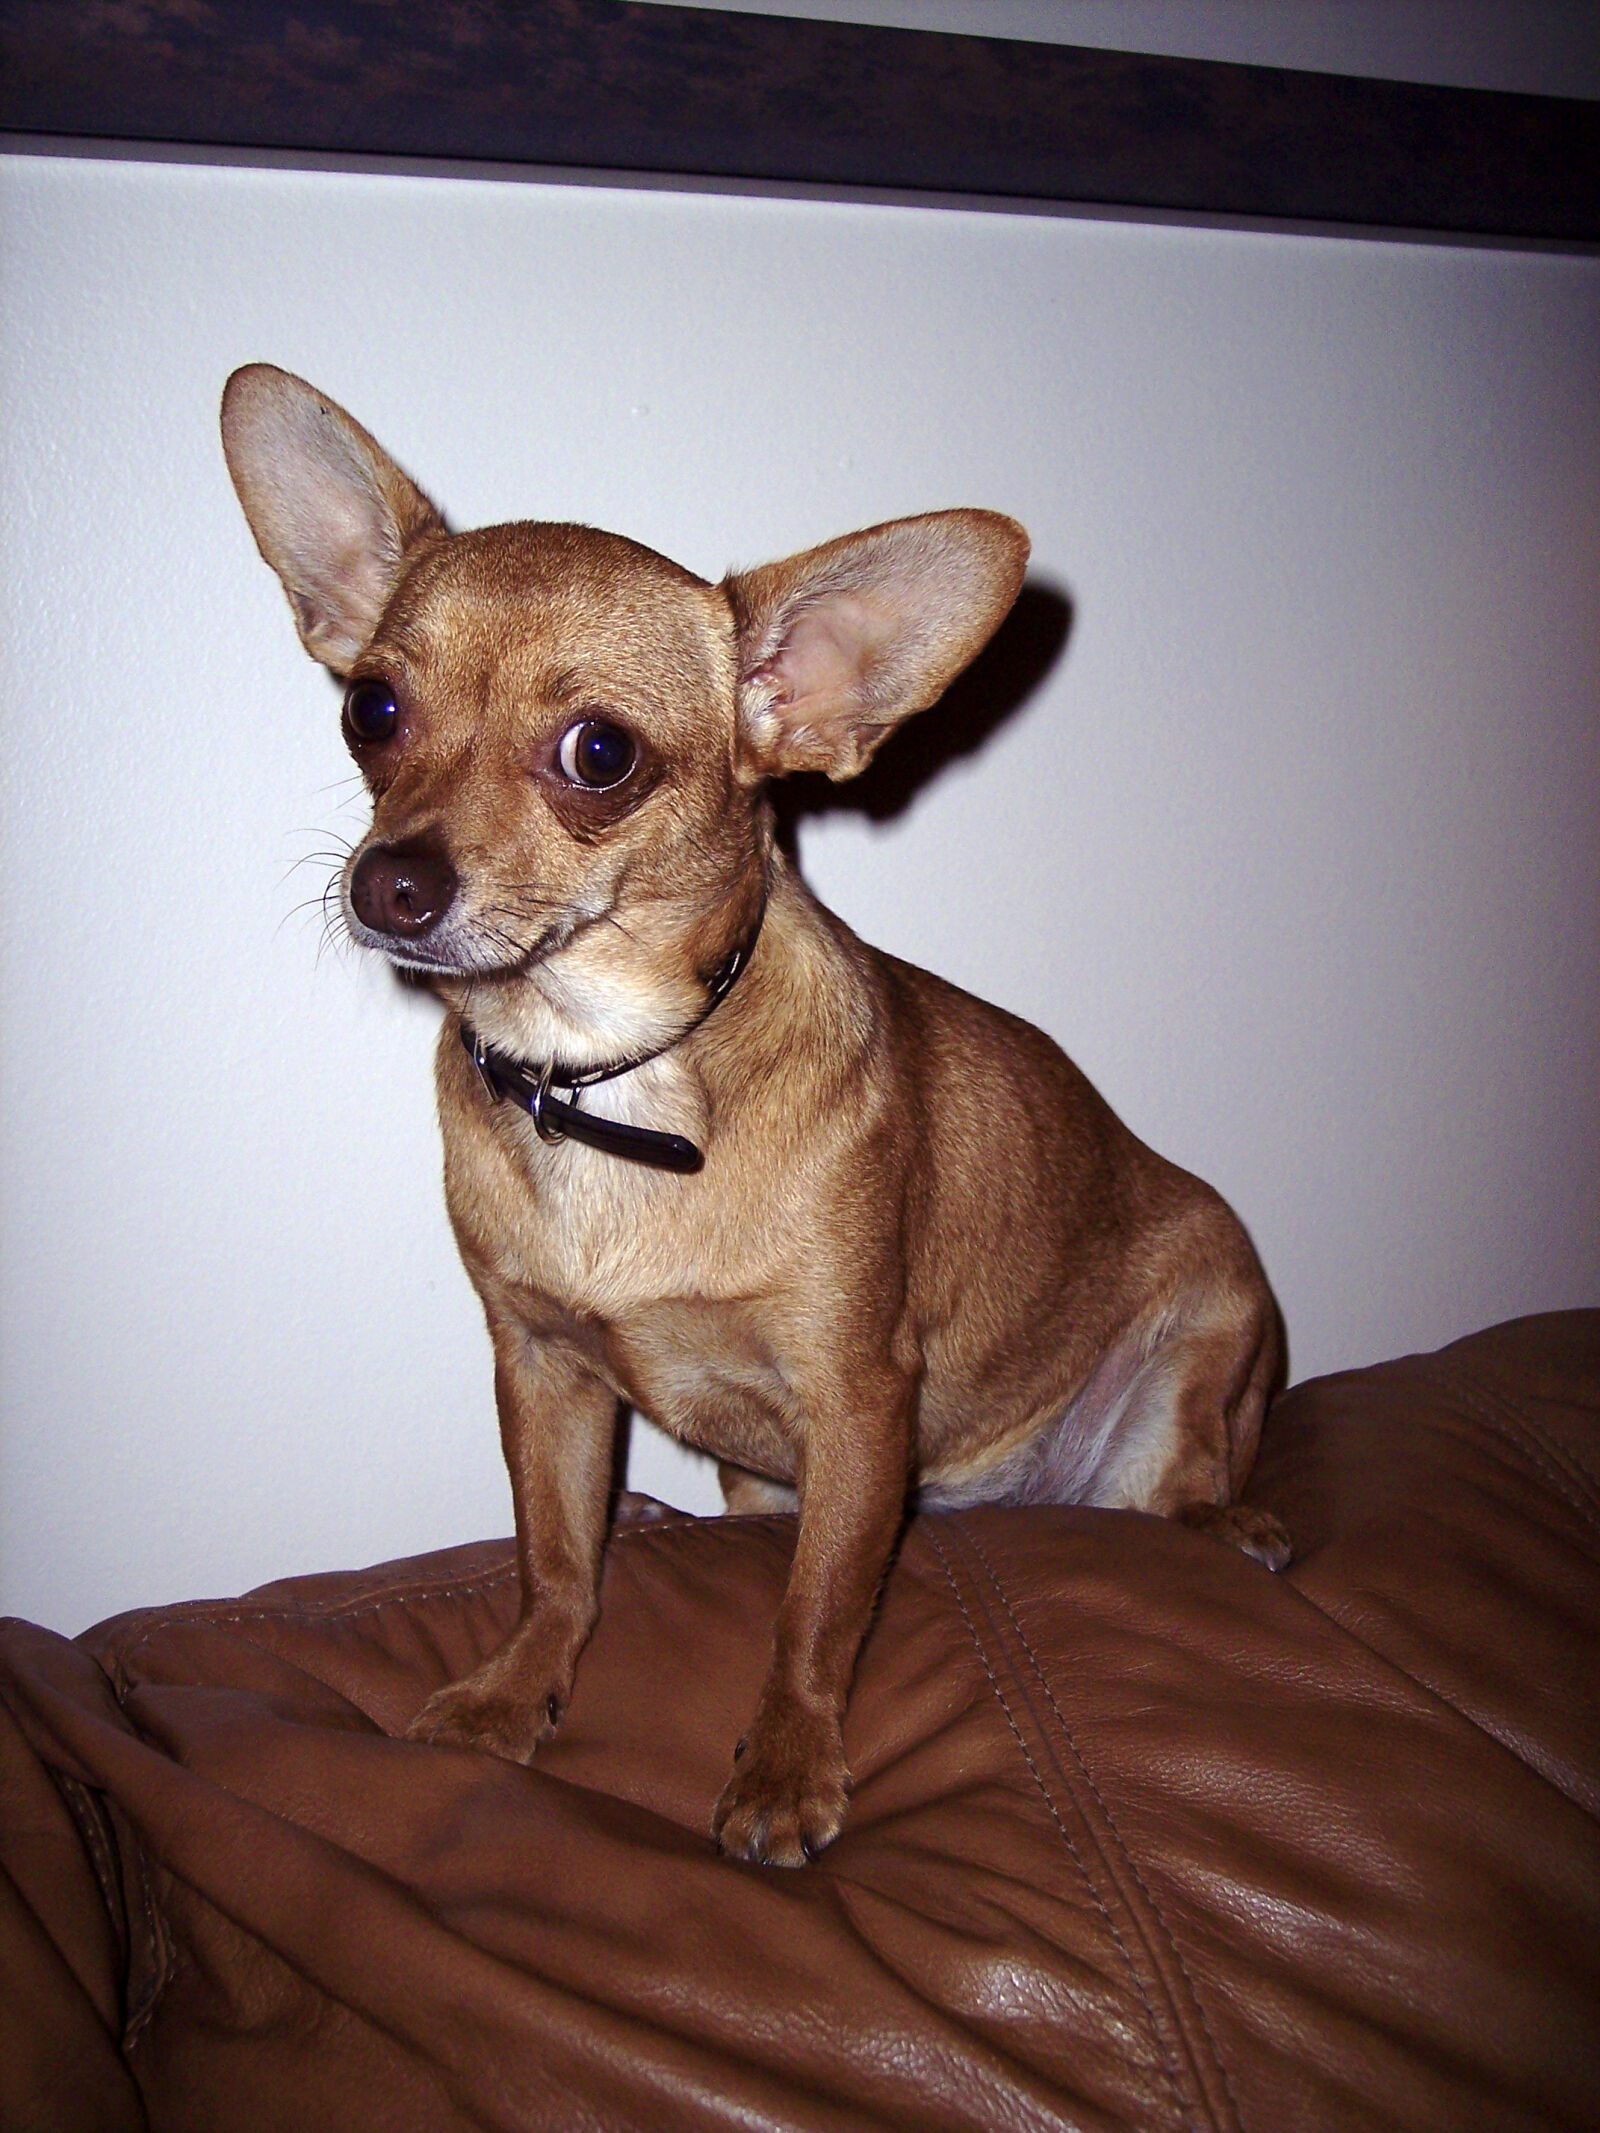 Kodak DX7630 ZOOM DIGITAL CAMERA sample photo. Chihuahua, dog photography